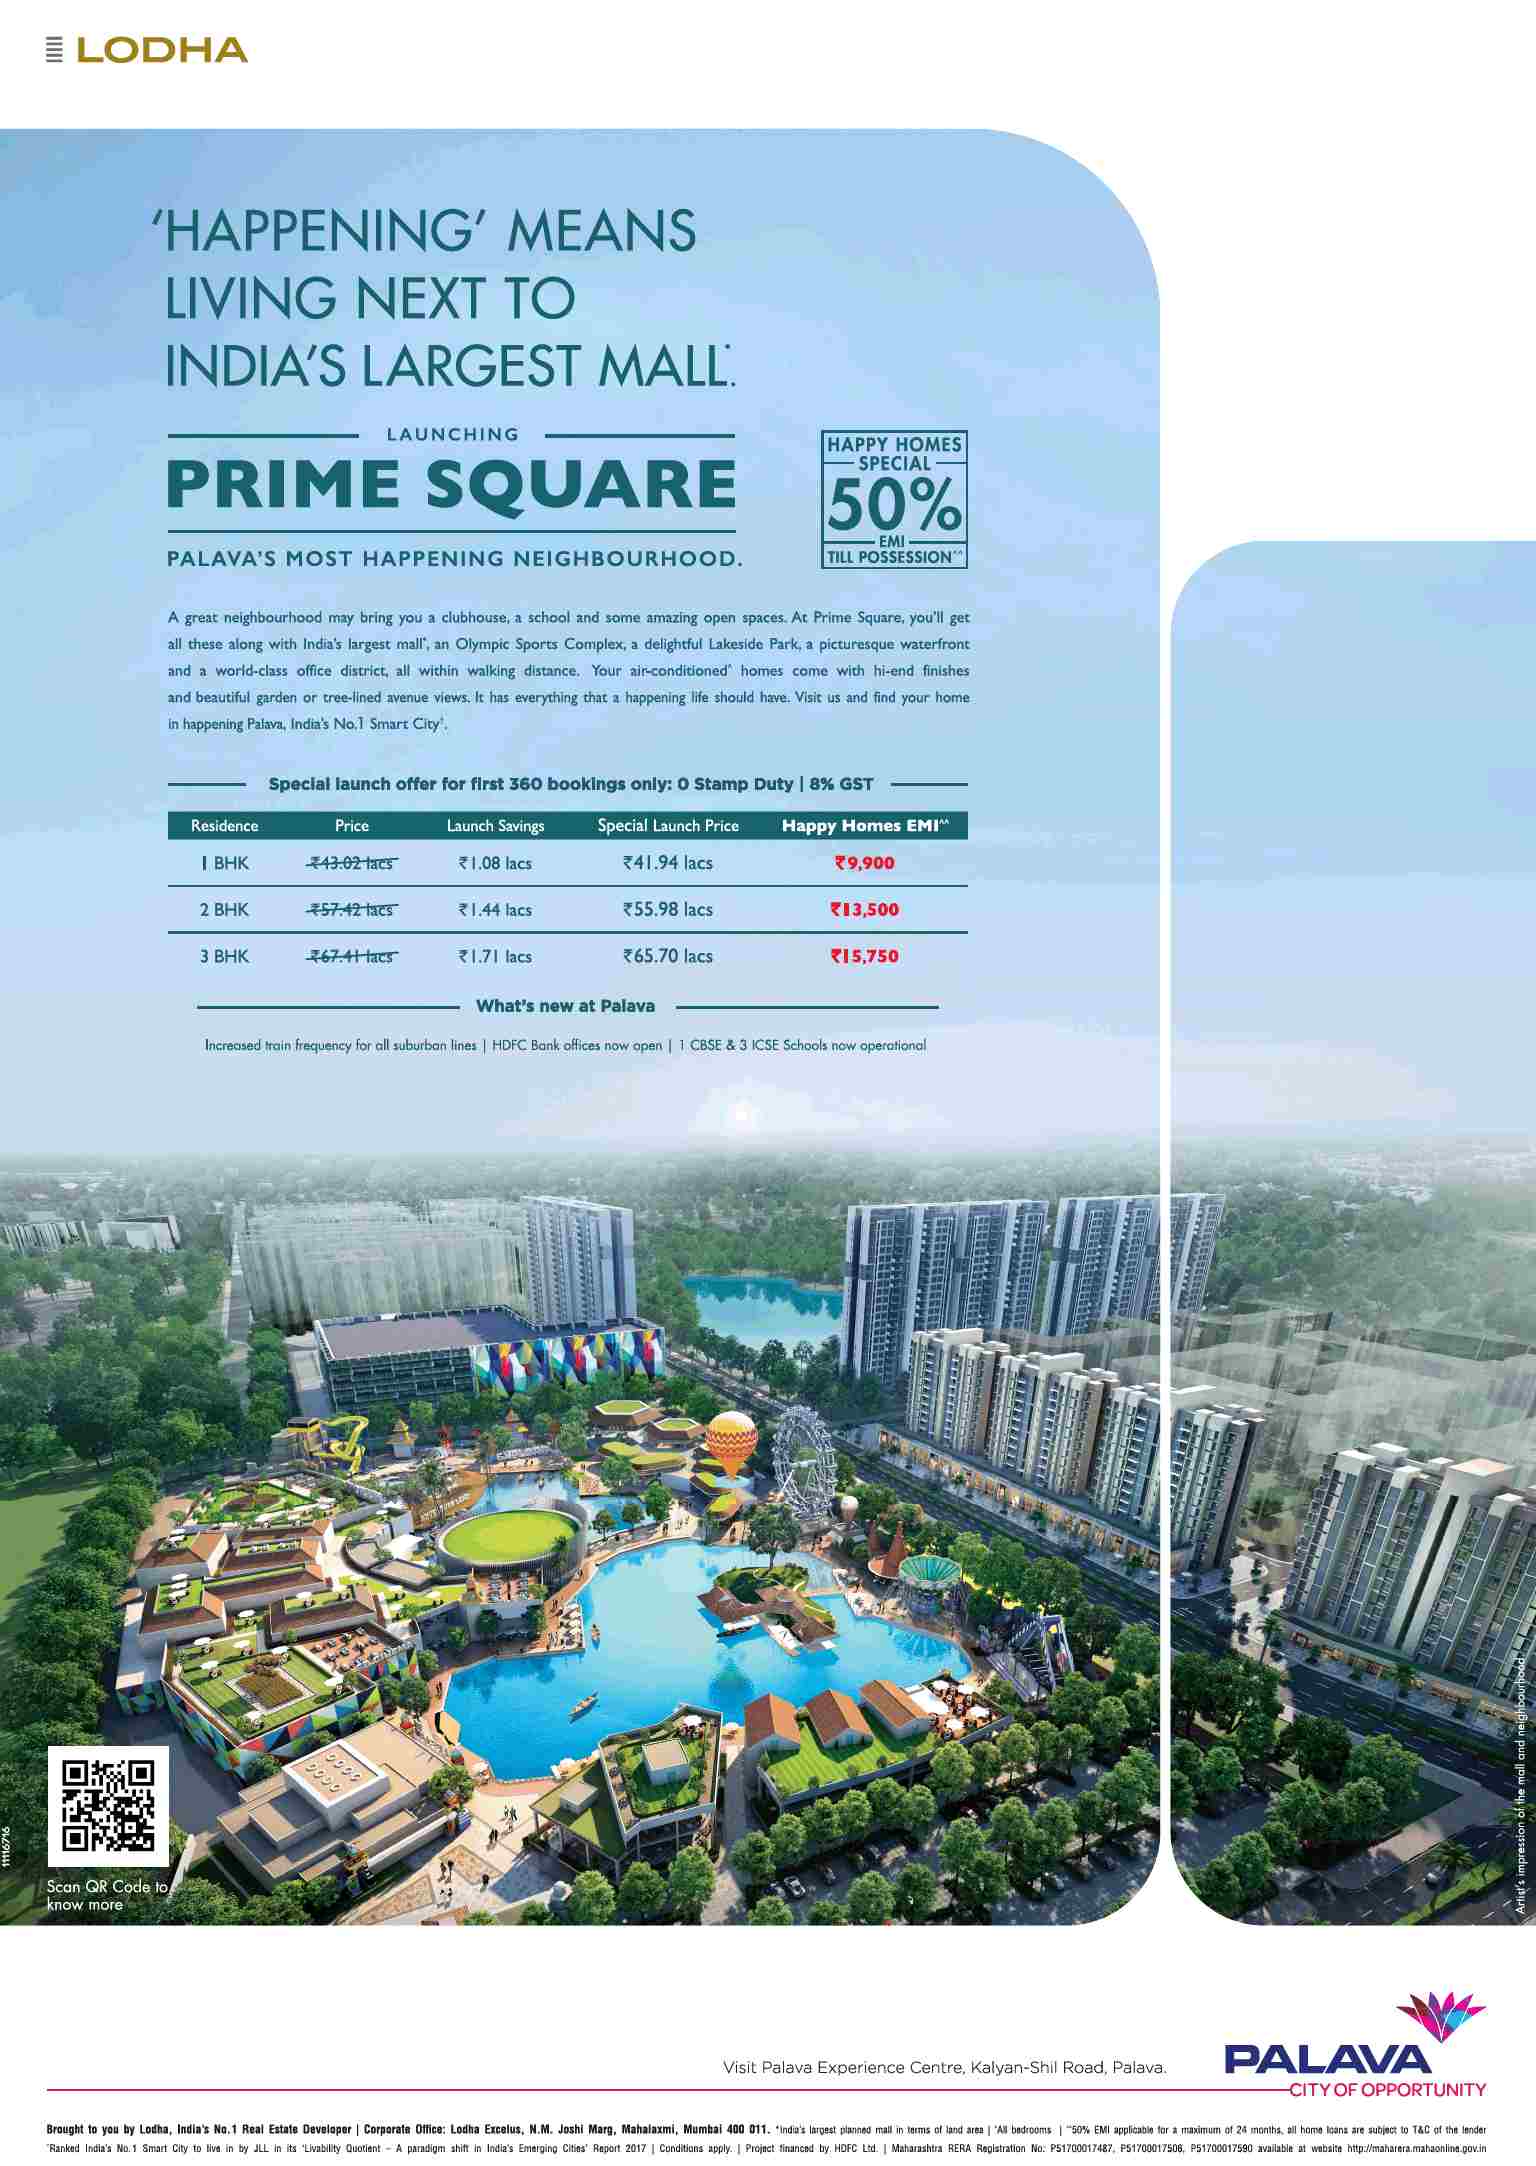 Pay 50% EMI till possession at Lodha Codename Prime Square in Mumbai Update